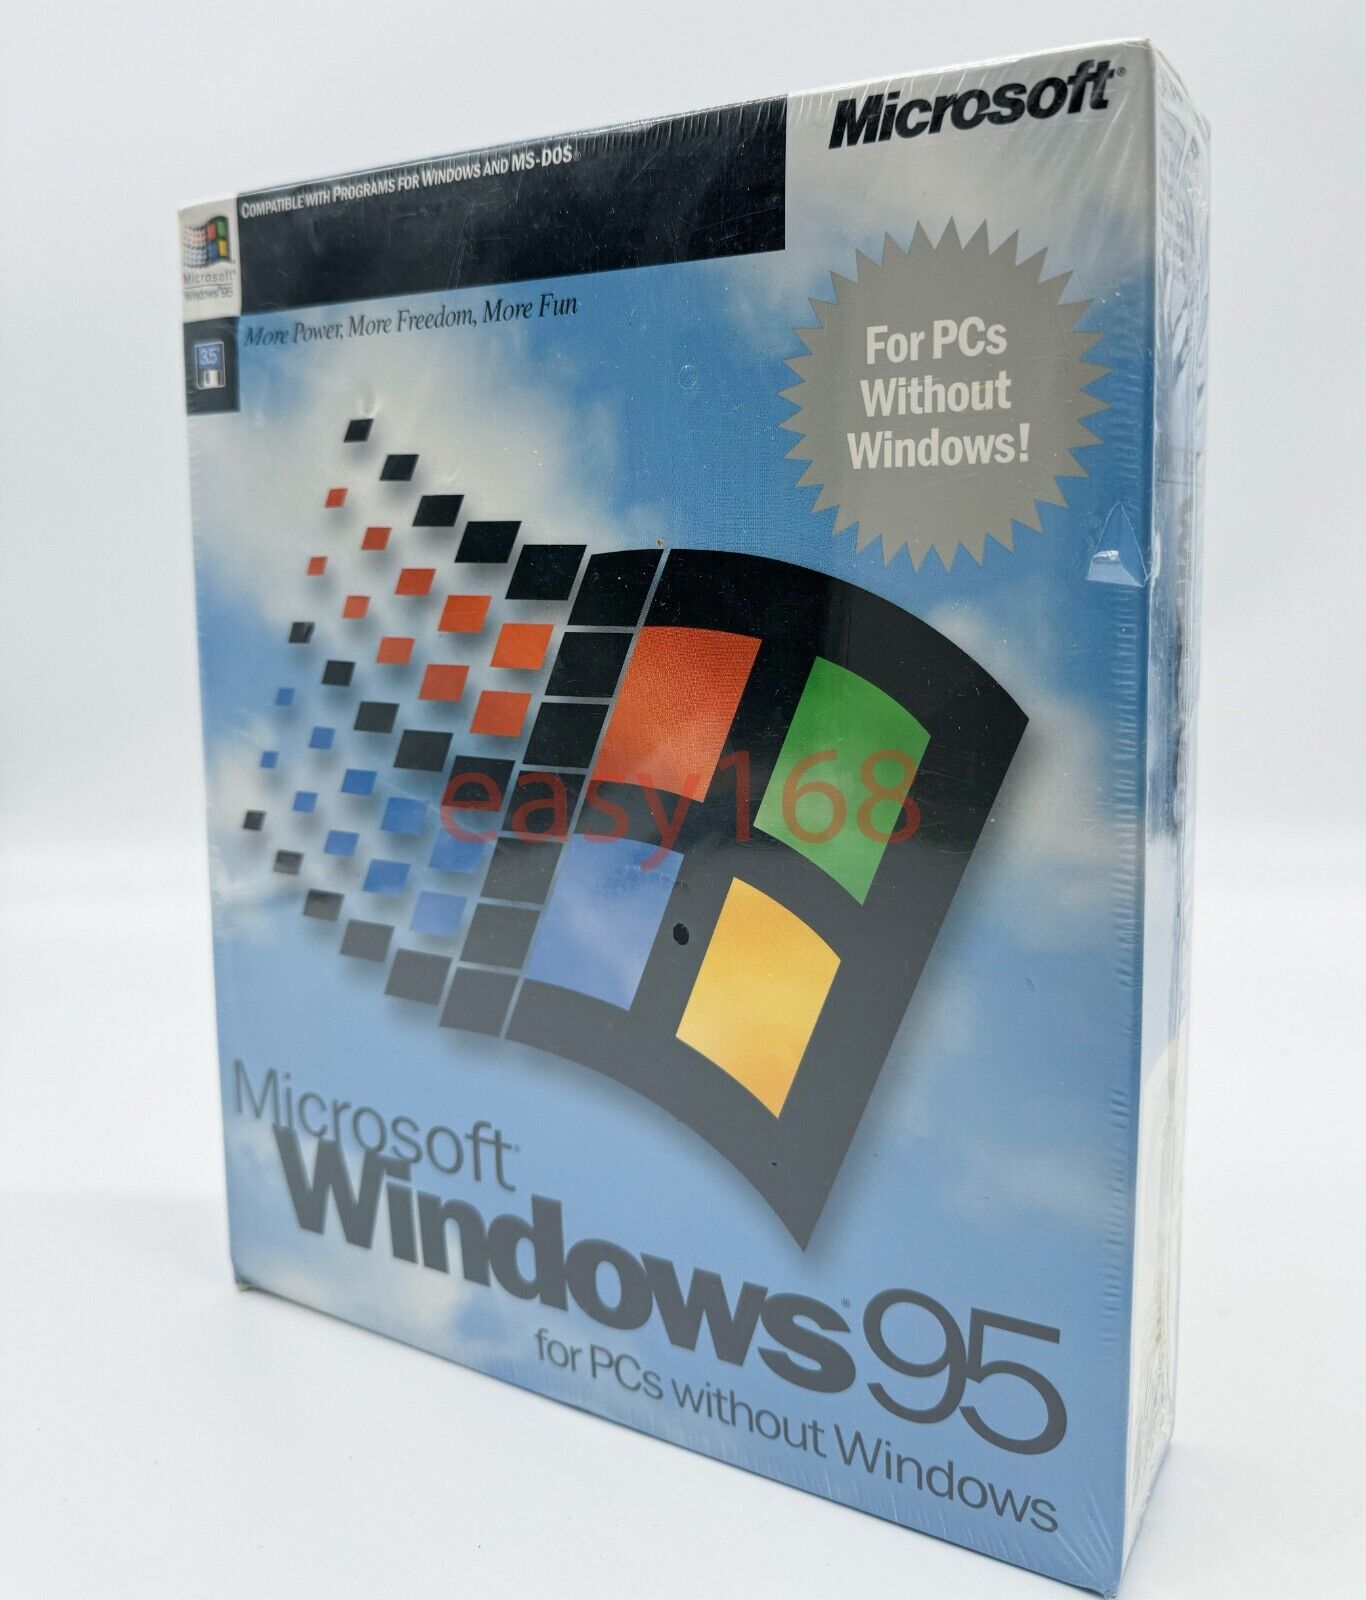 New Sealed Microsoft Windows 95 OS 3.5